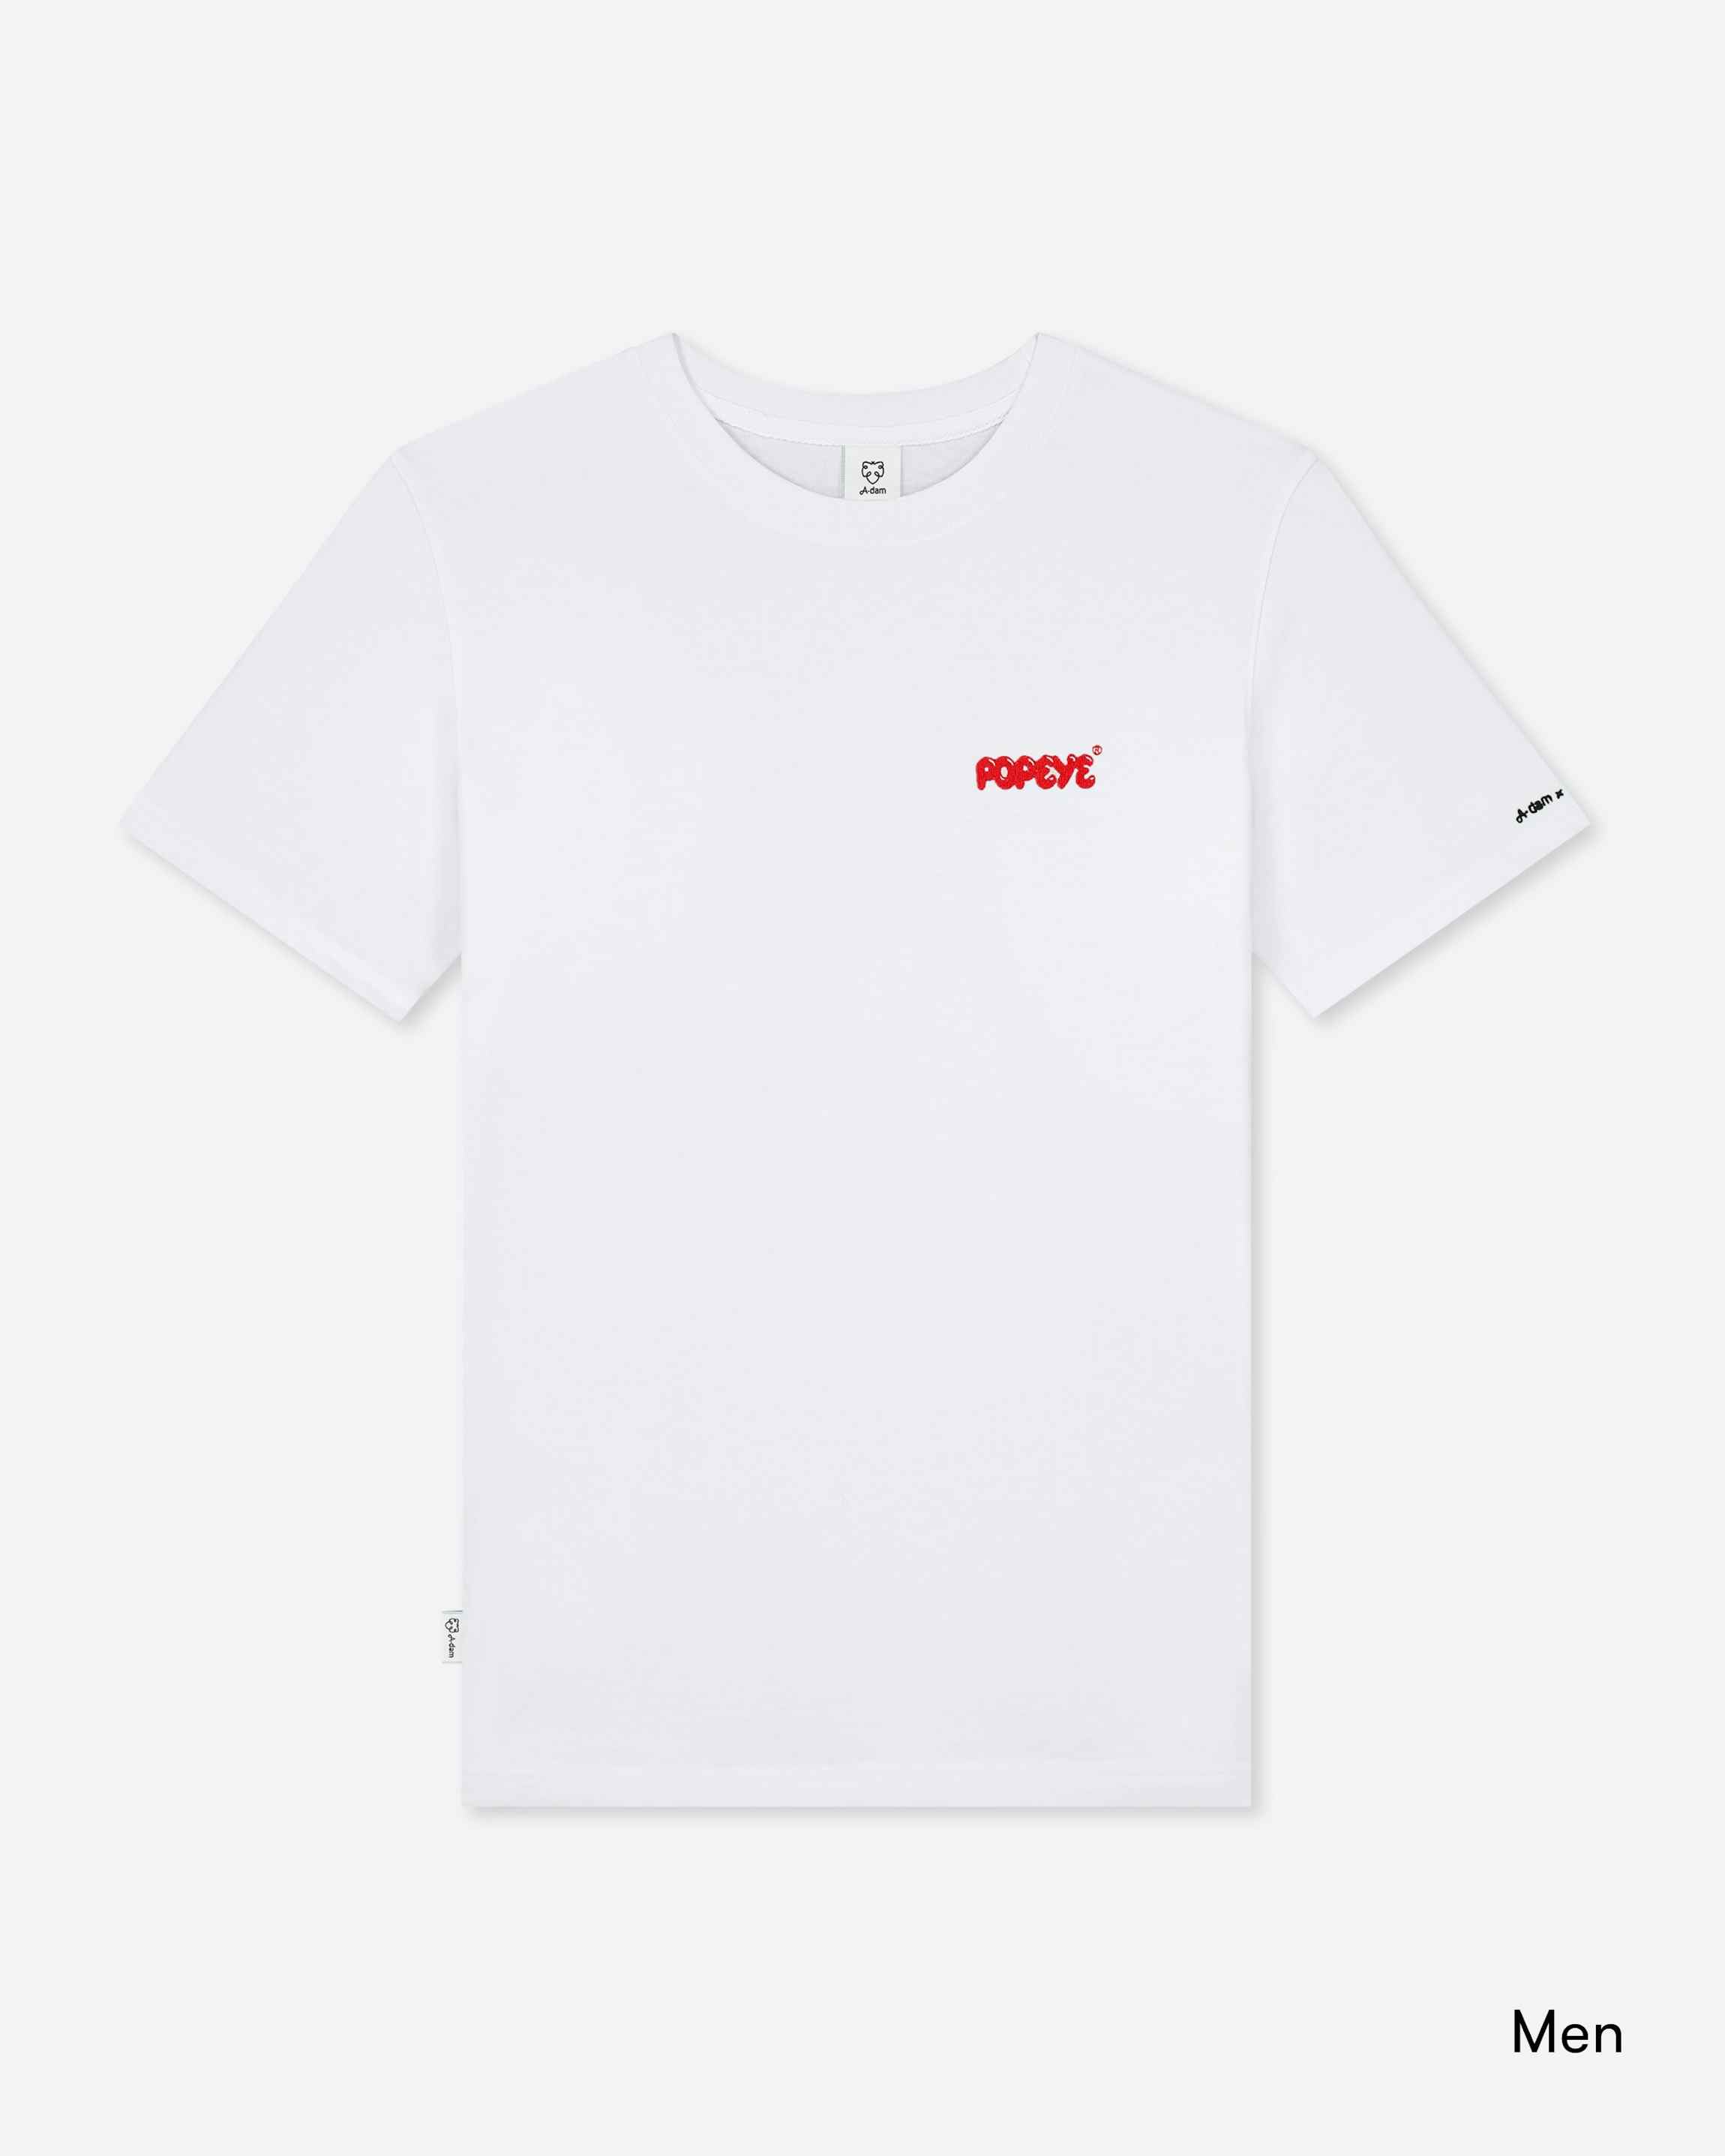 https://a-dam.com/men/t-shirts/pop-white